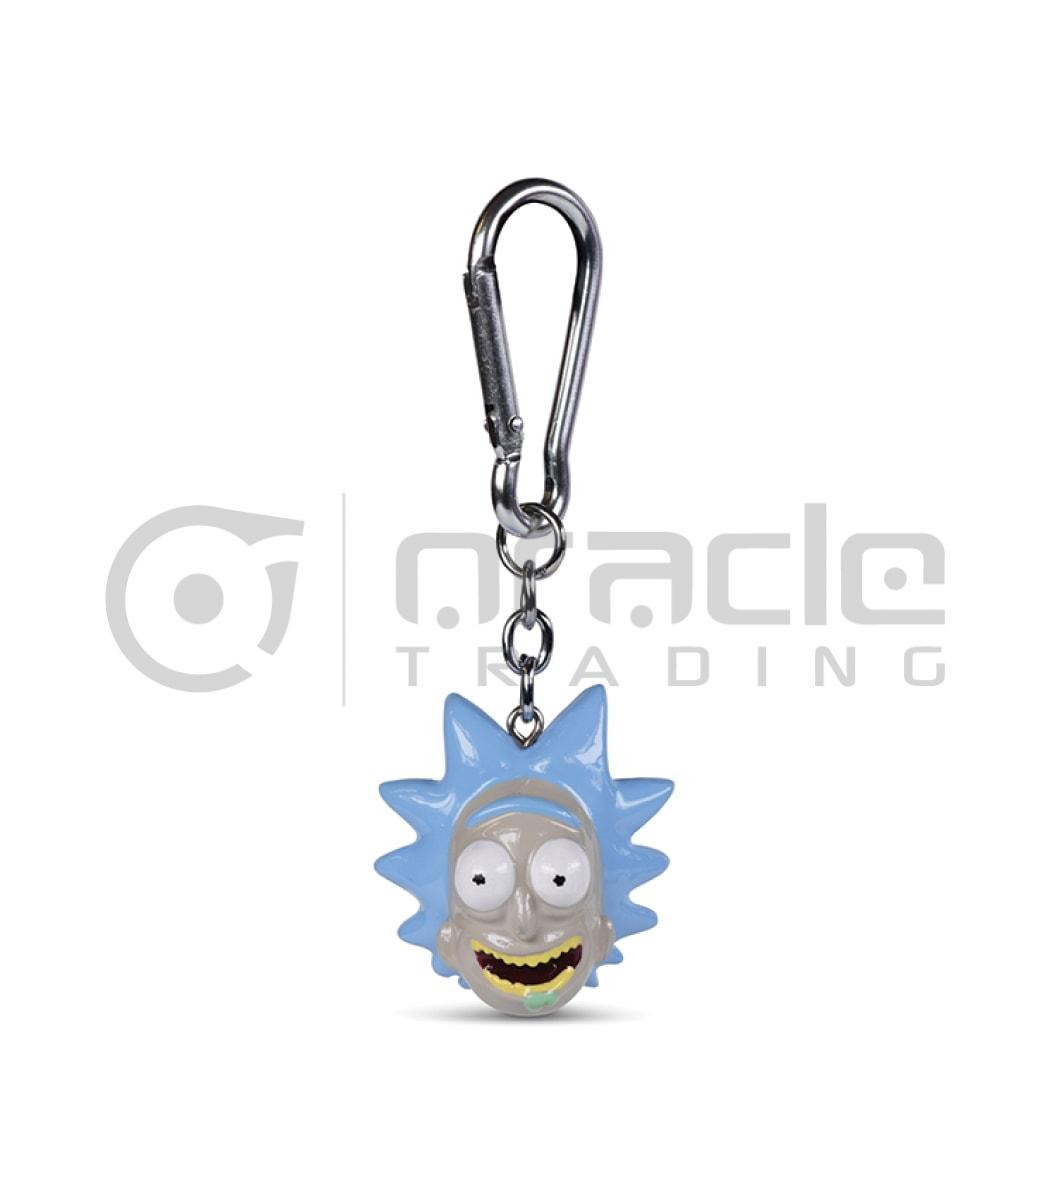 Rick & Morty 3D Keychain - Rick